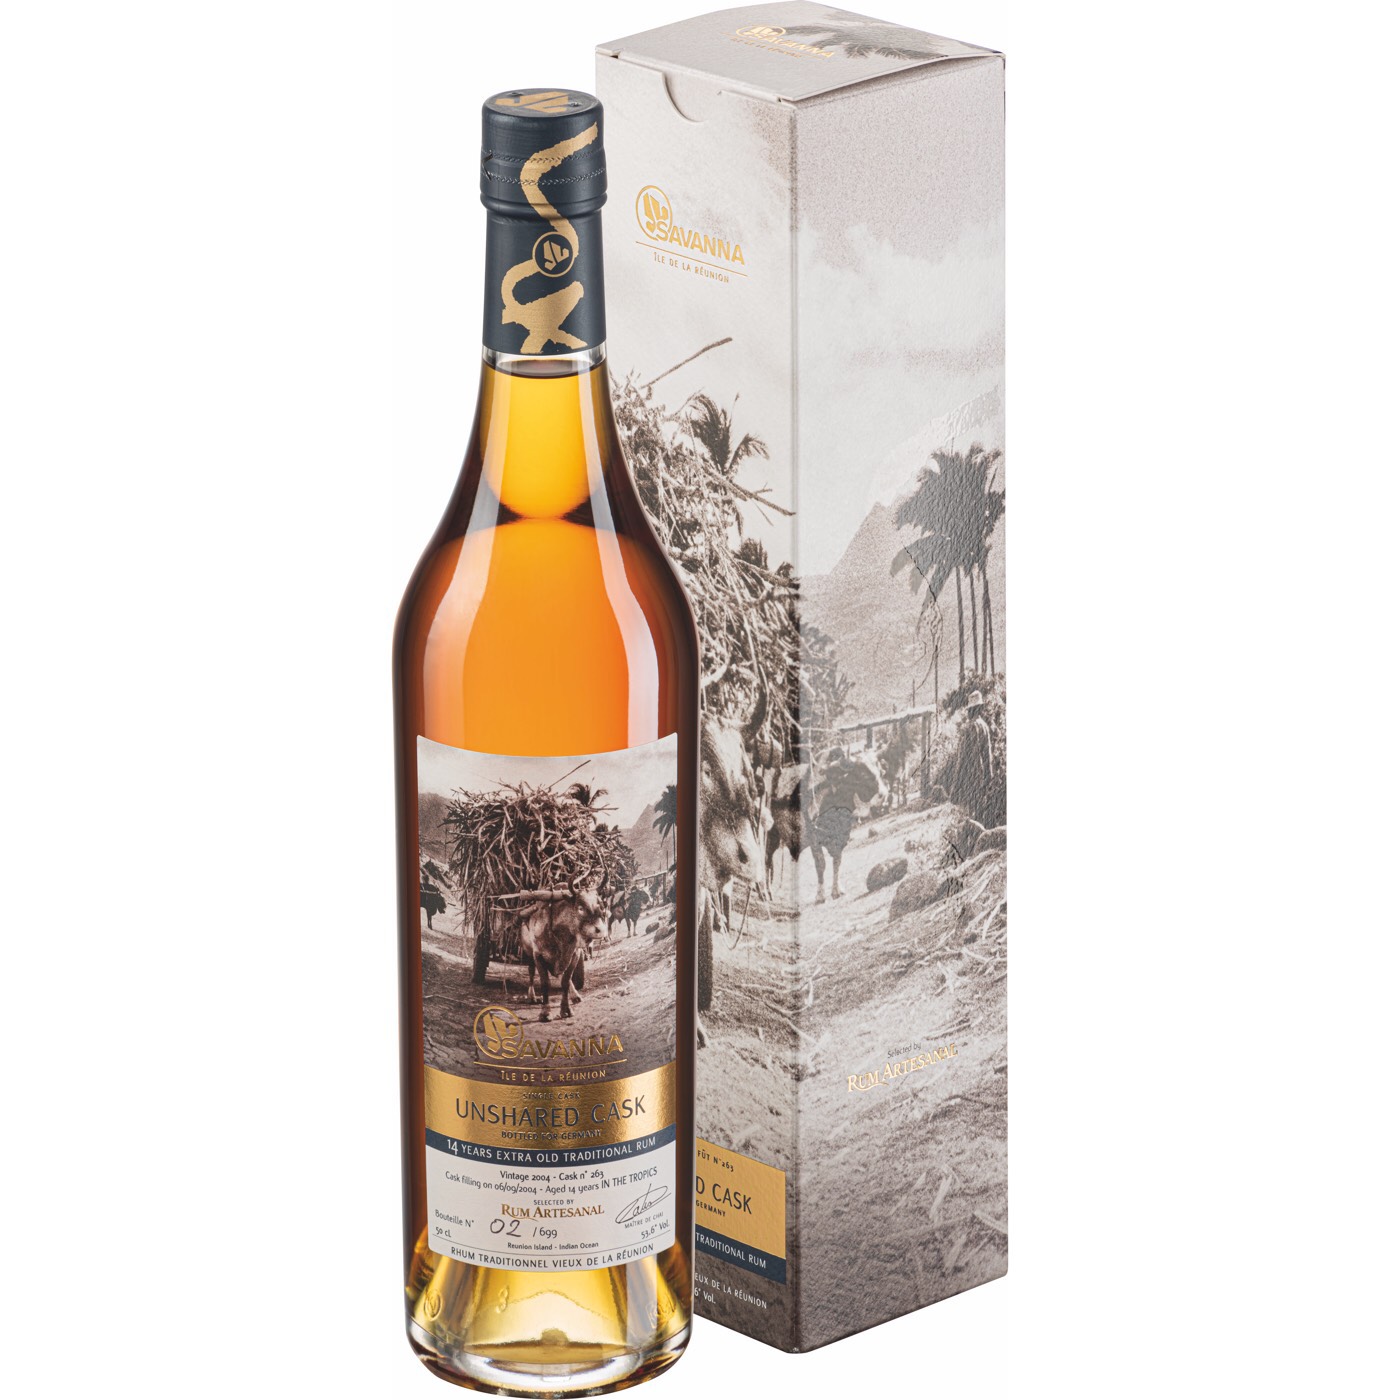 Bottle image of Rum Artesanal Unshared Cask for Germany